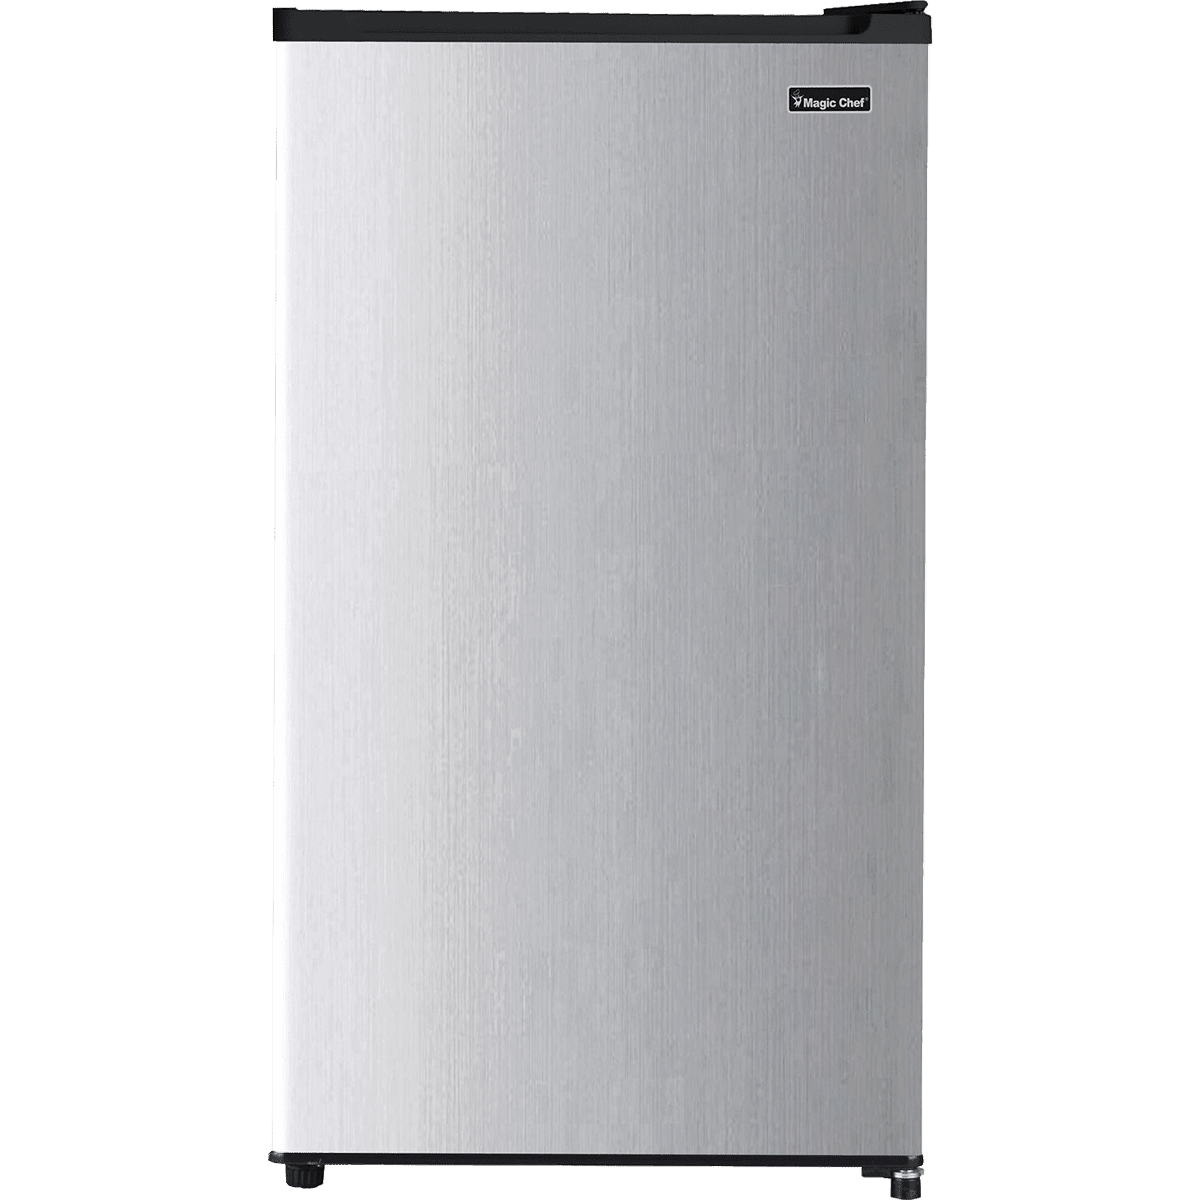 Magic Chef MCBR440S2 mini fridge review